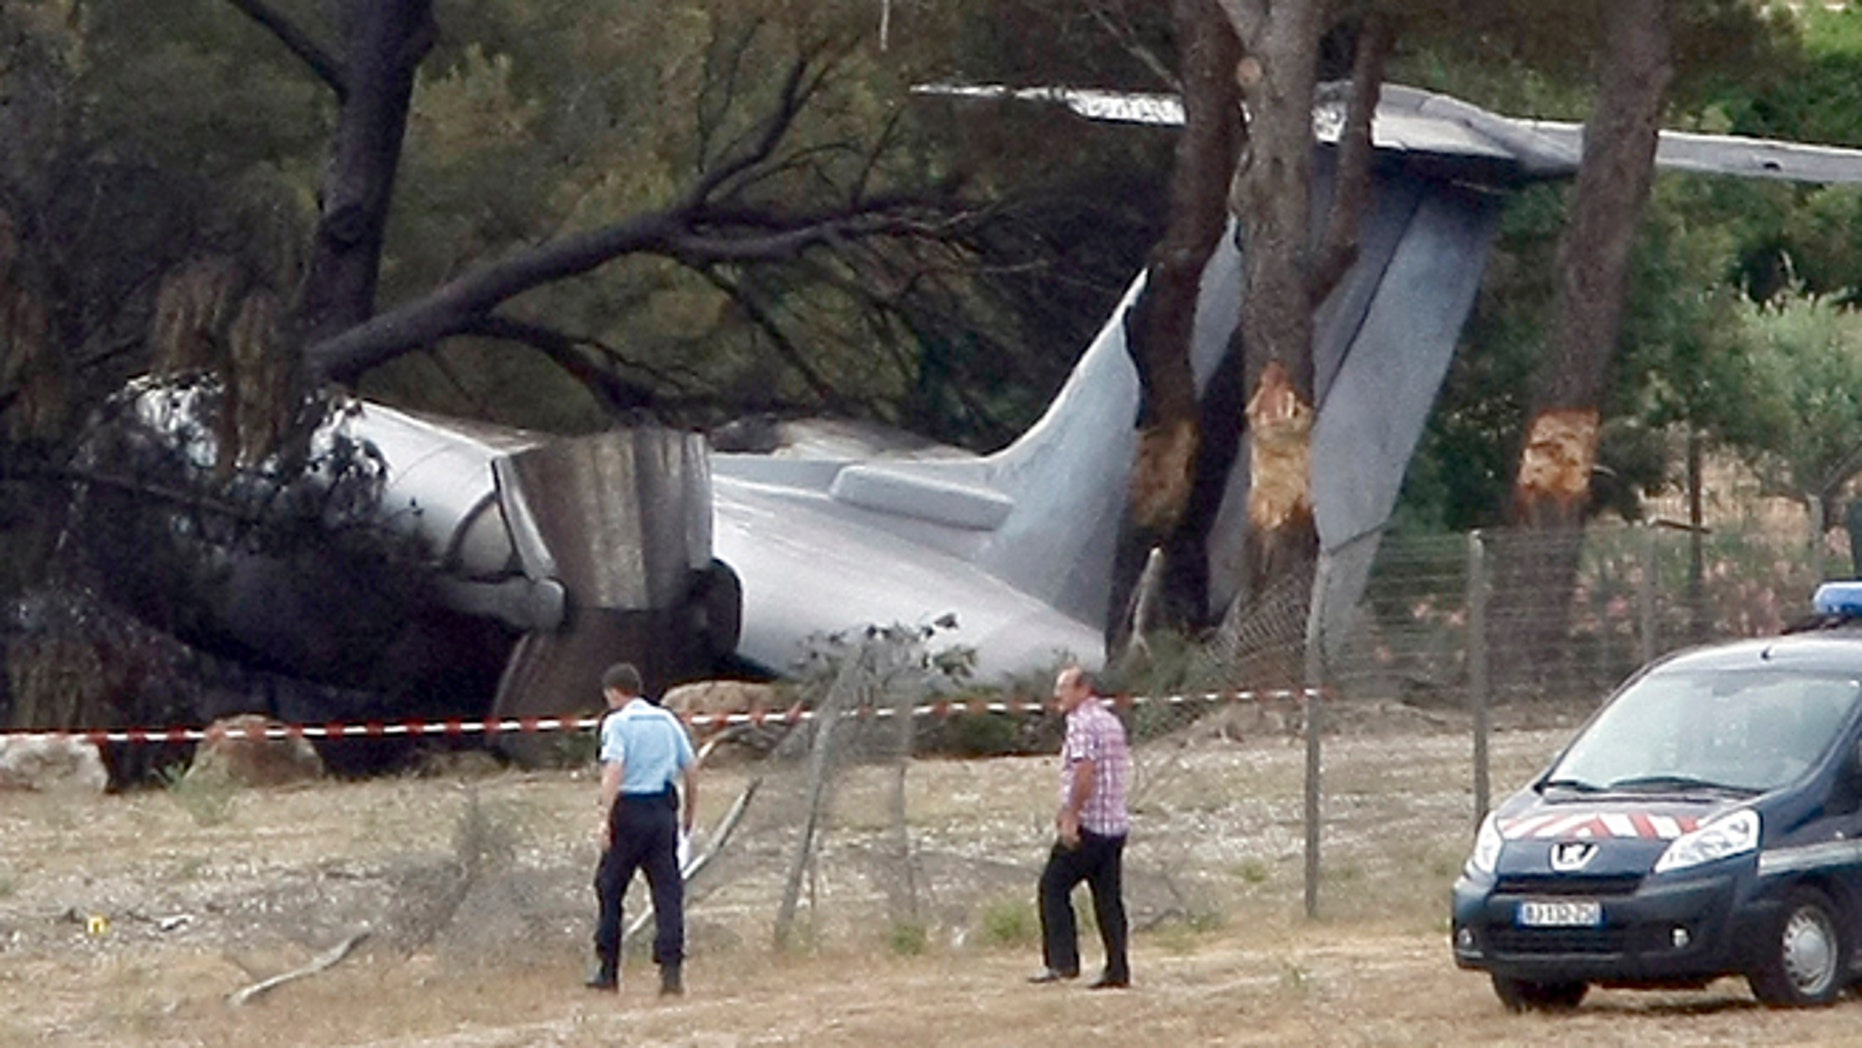 3 Americans die in plane crash in south of France Fox News